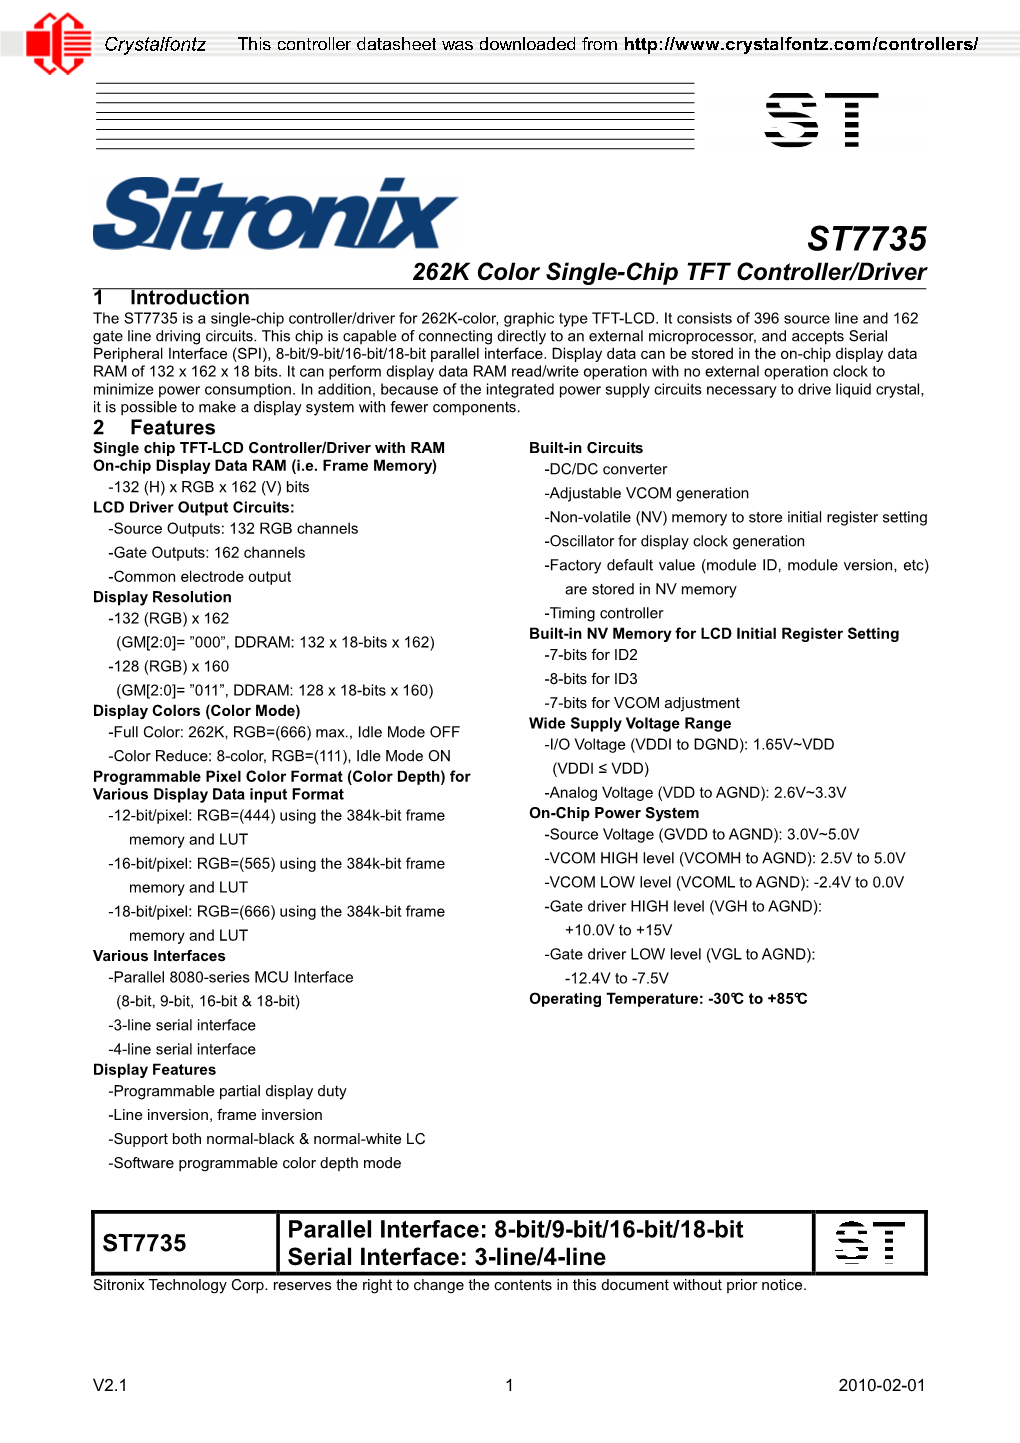 Sitronix ST7735 Controller Datasheet